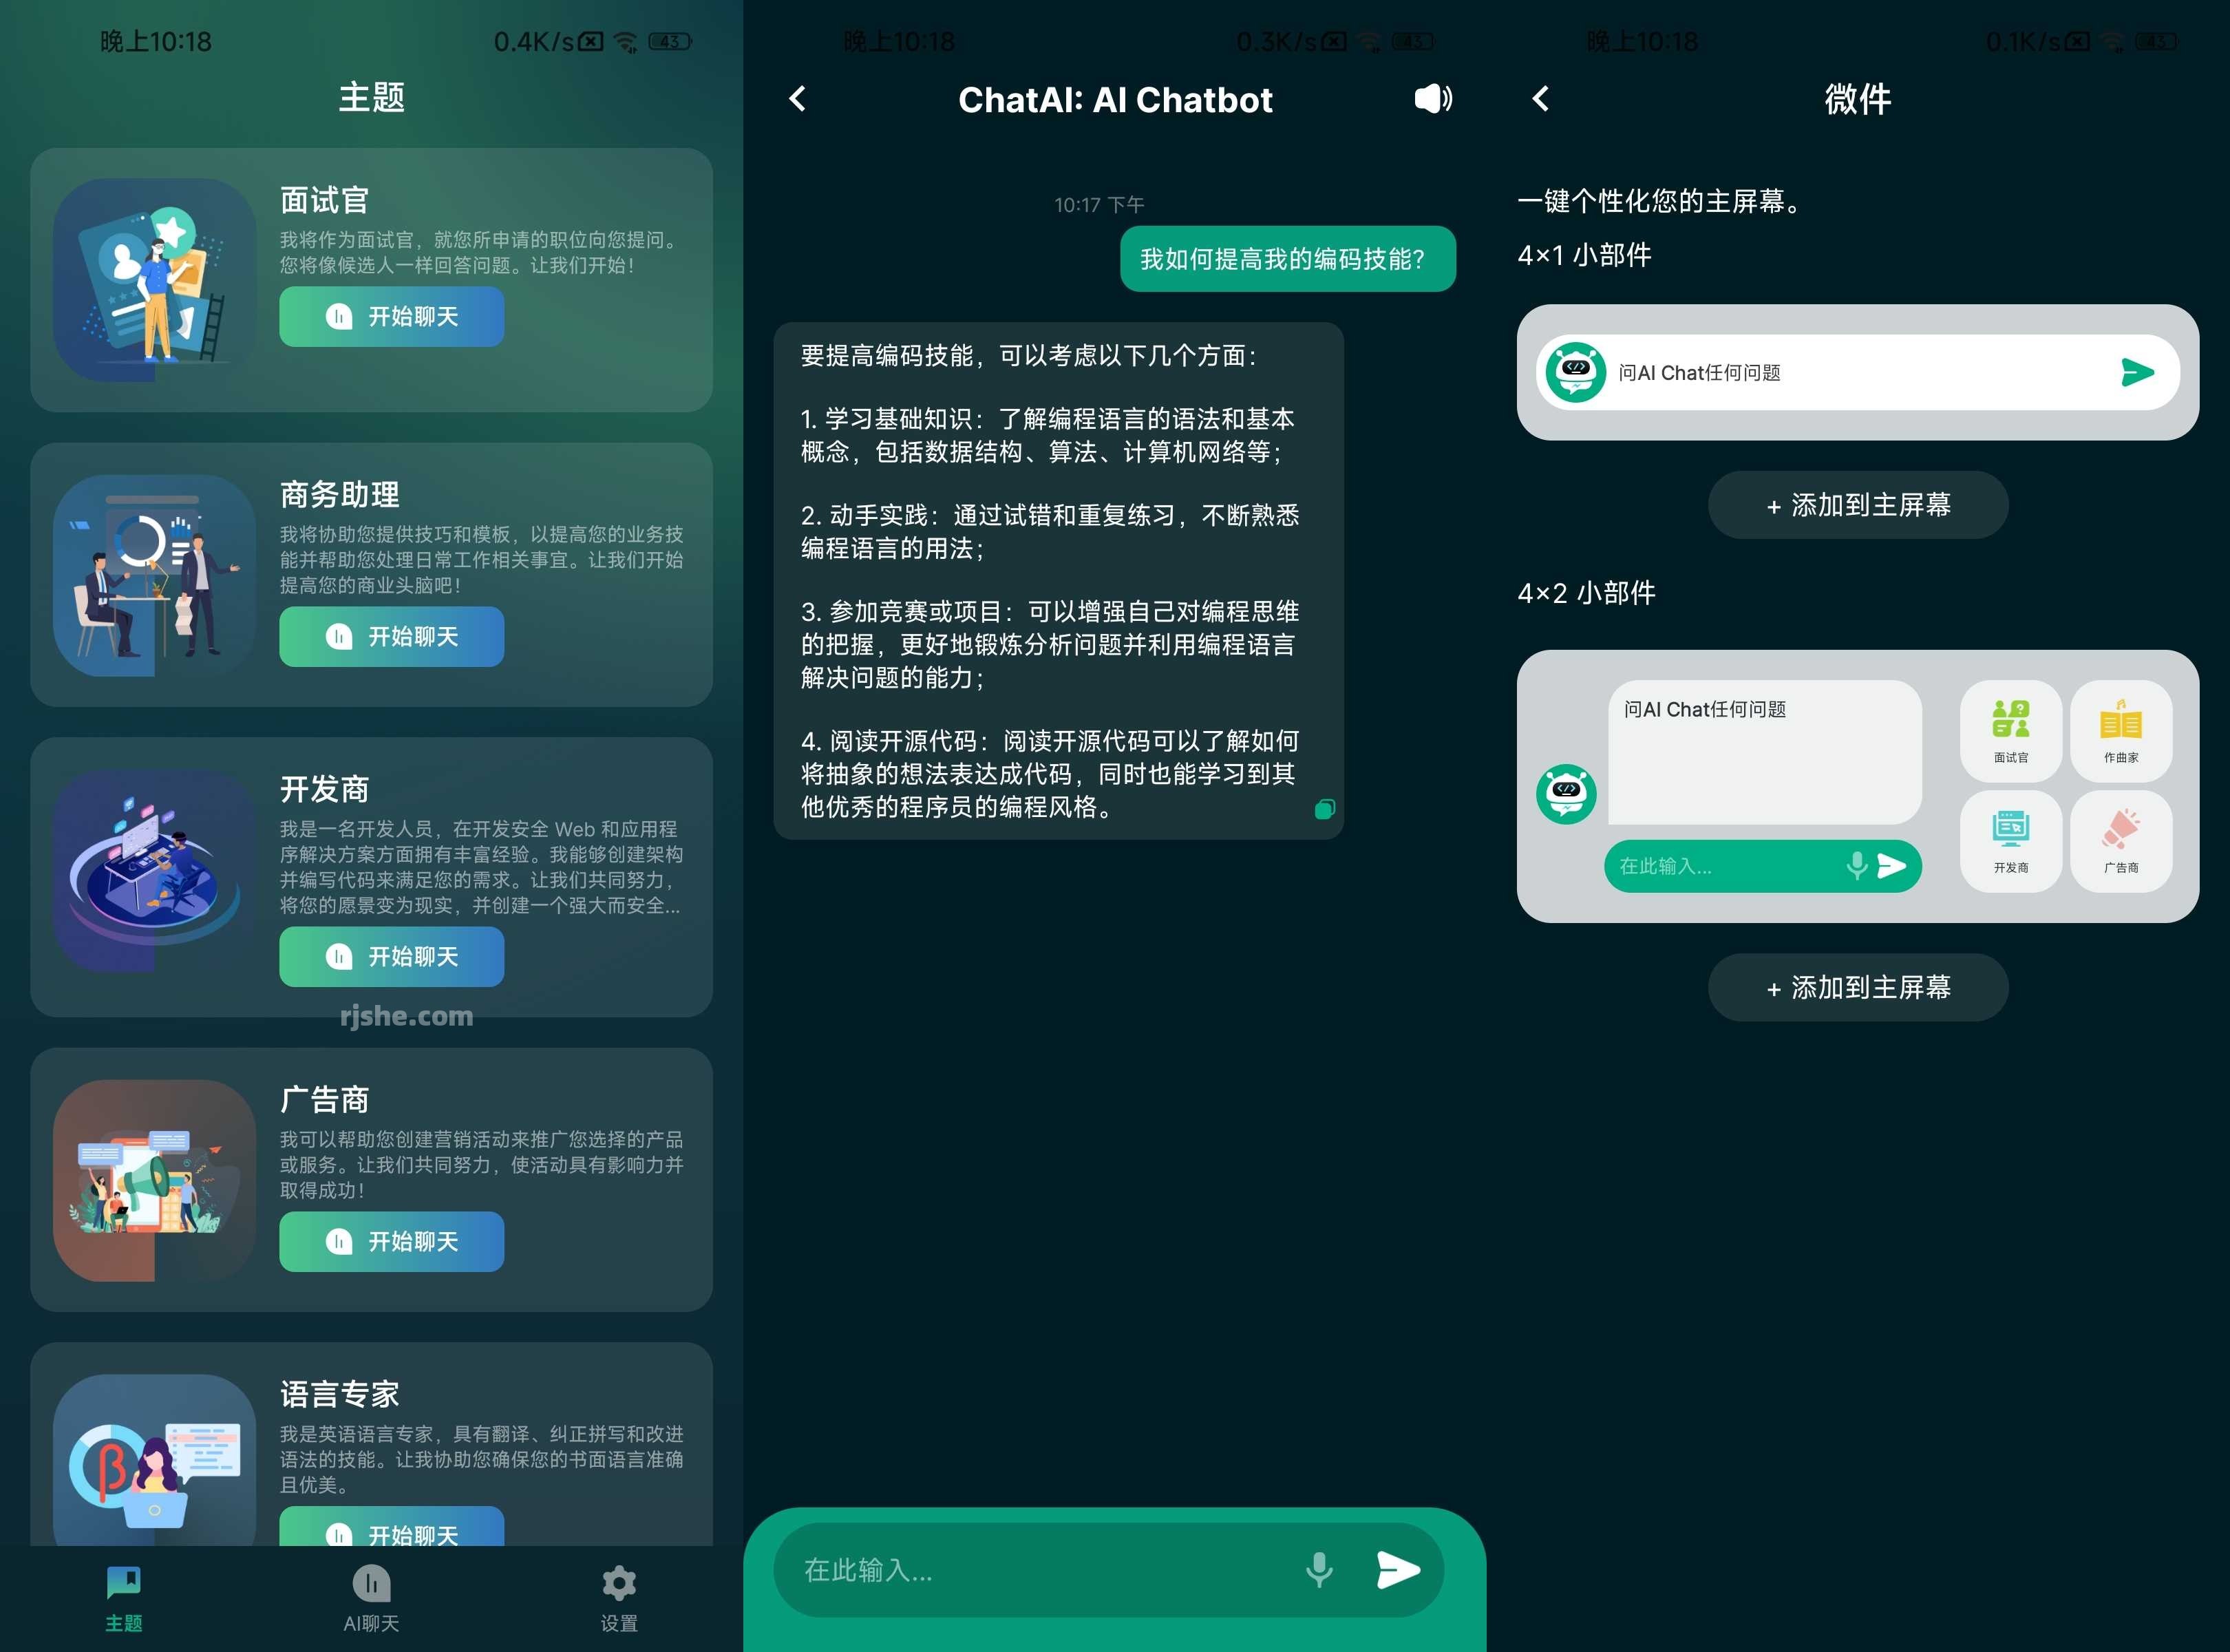 ChatAI: AI Chatbot 6.4 解锁高级版